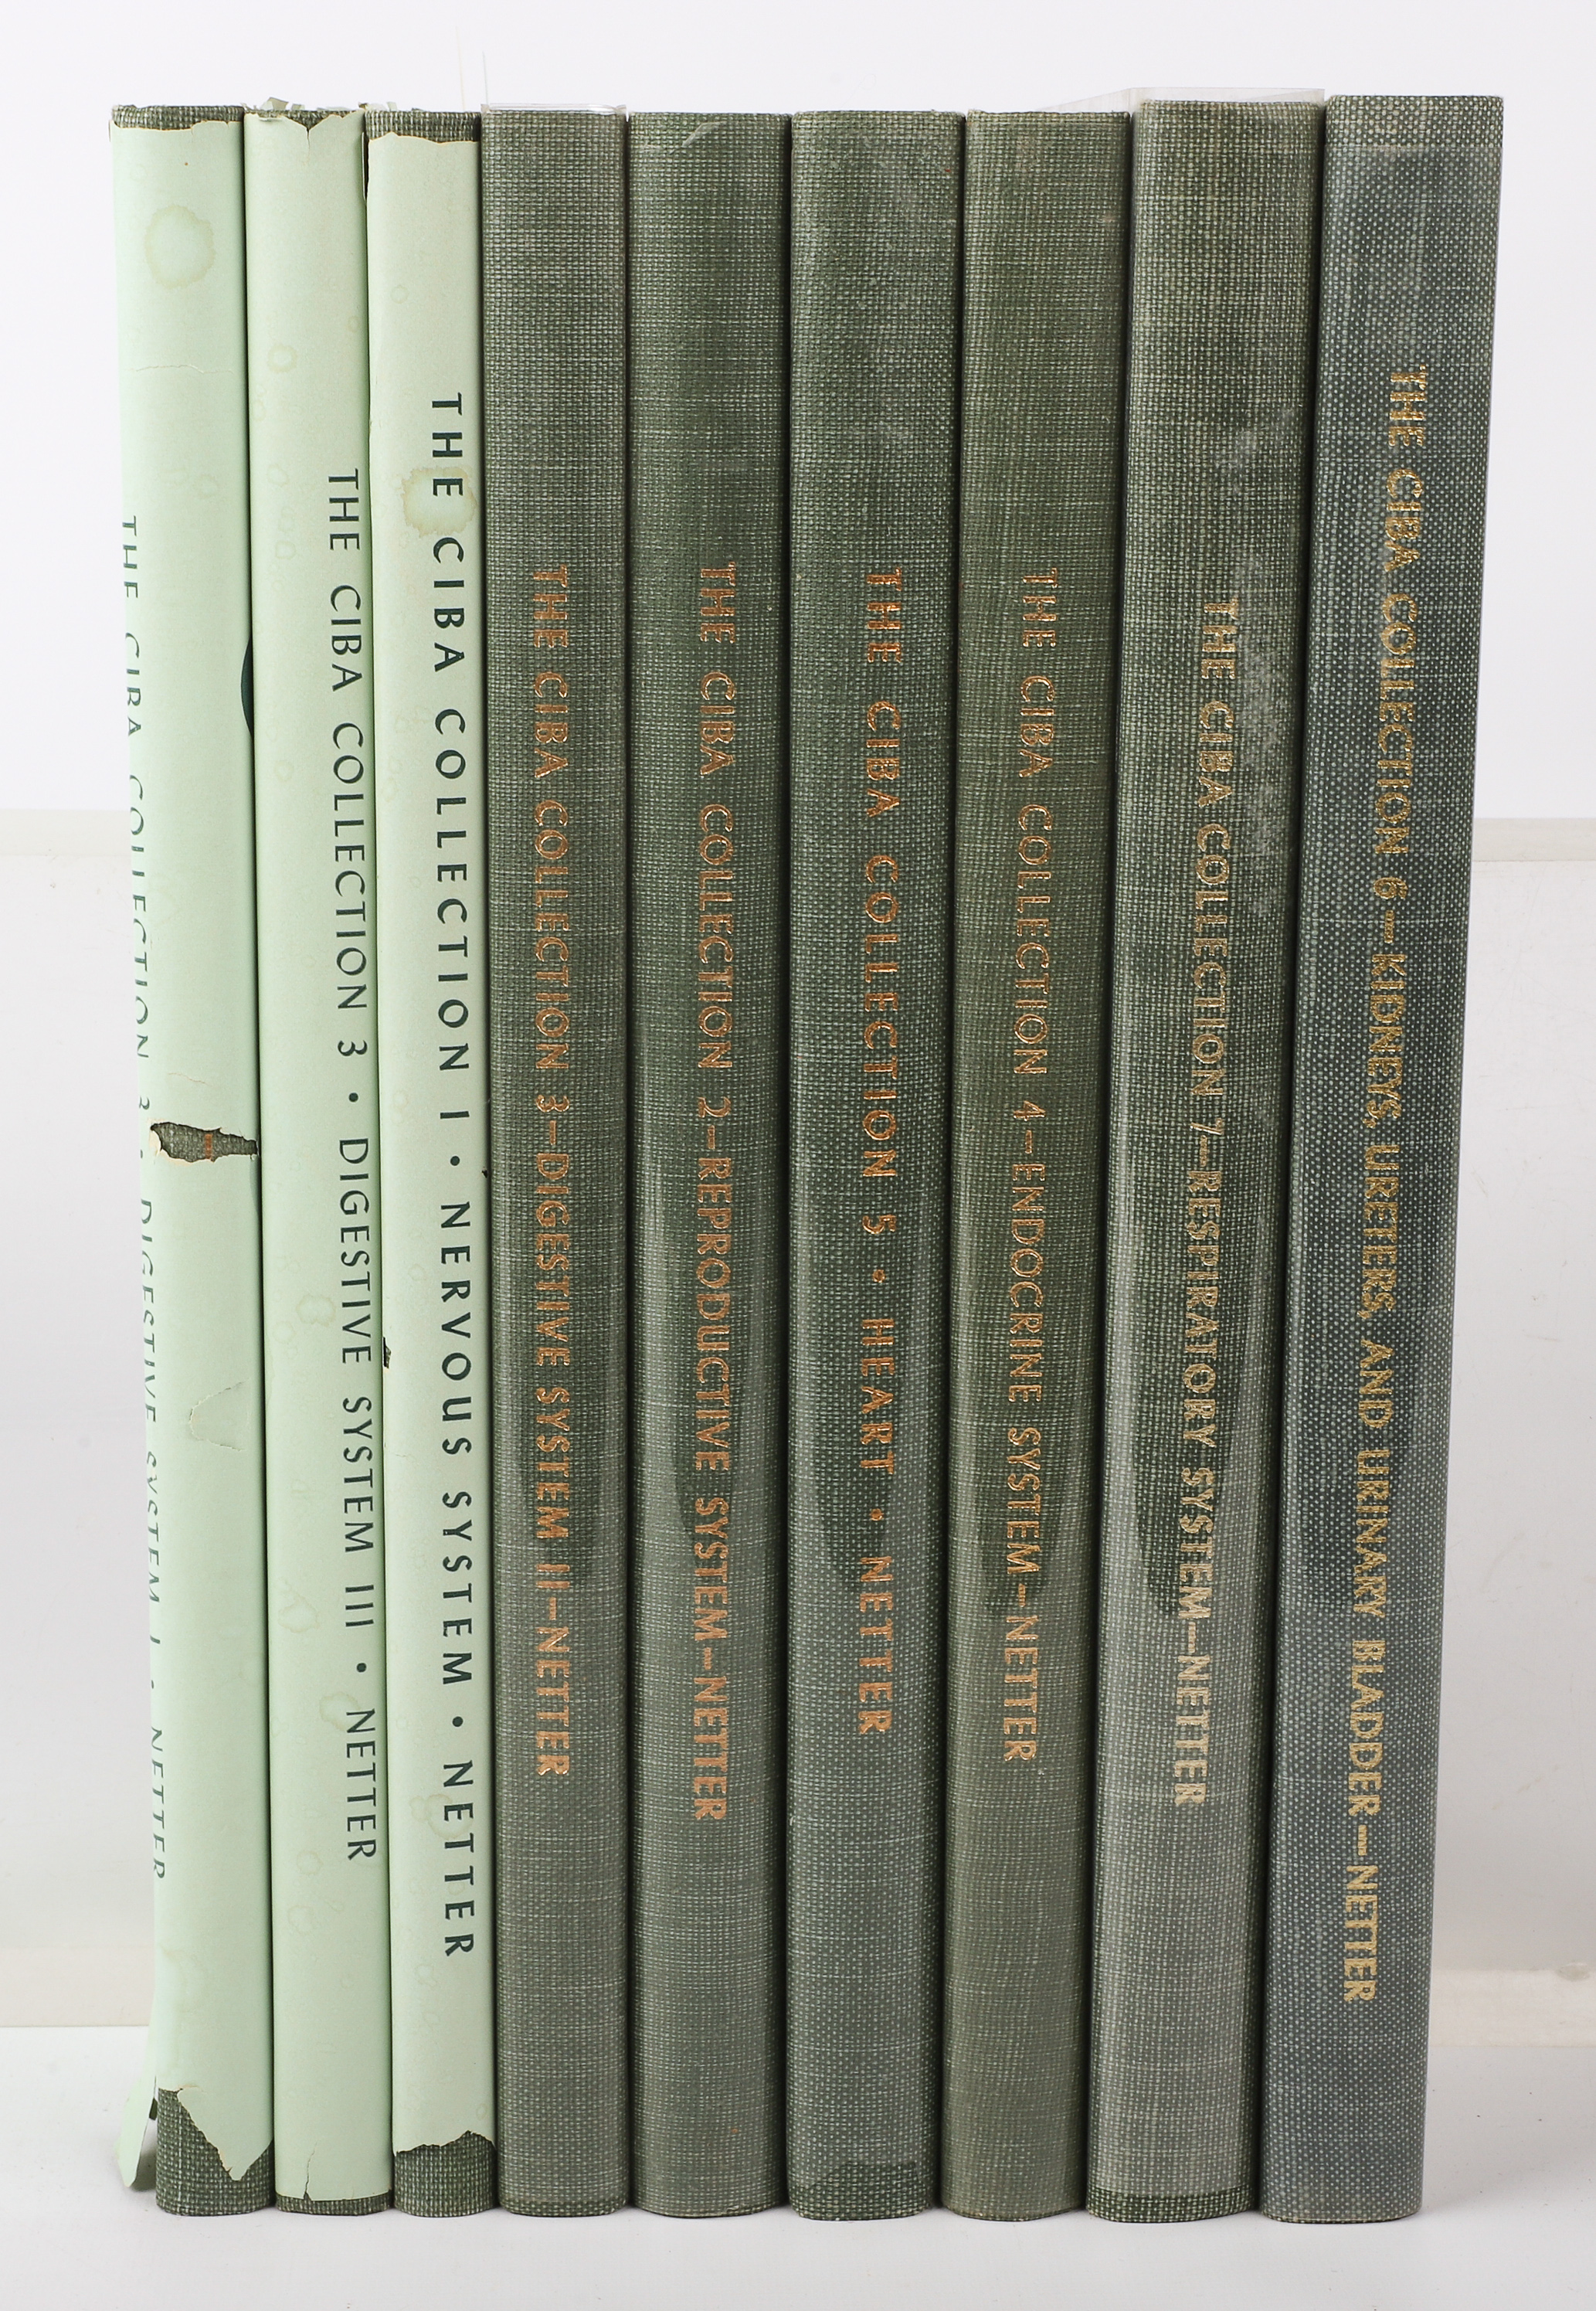 Nine volumes of The Ciba Collection 3b122f